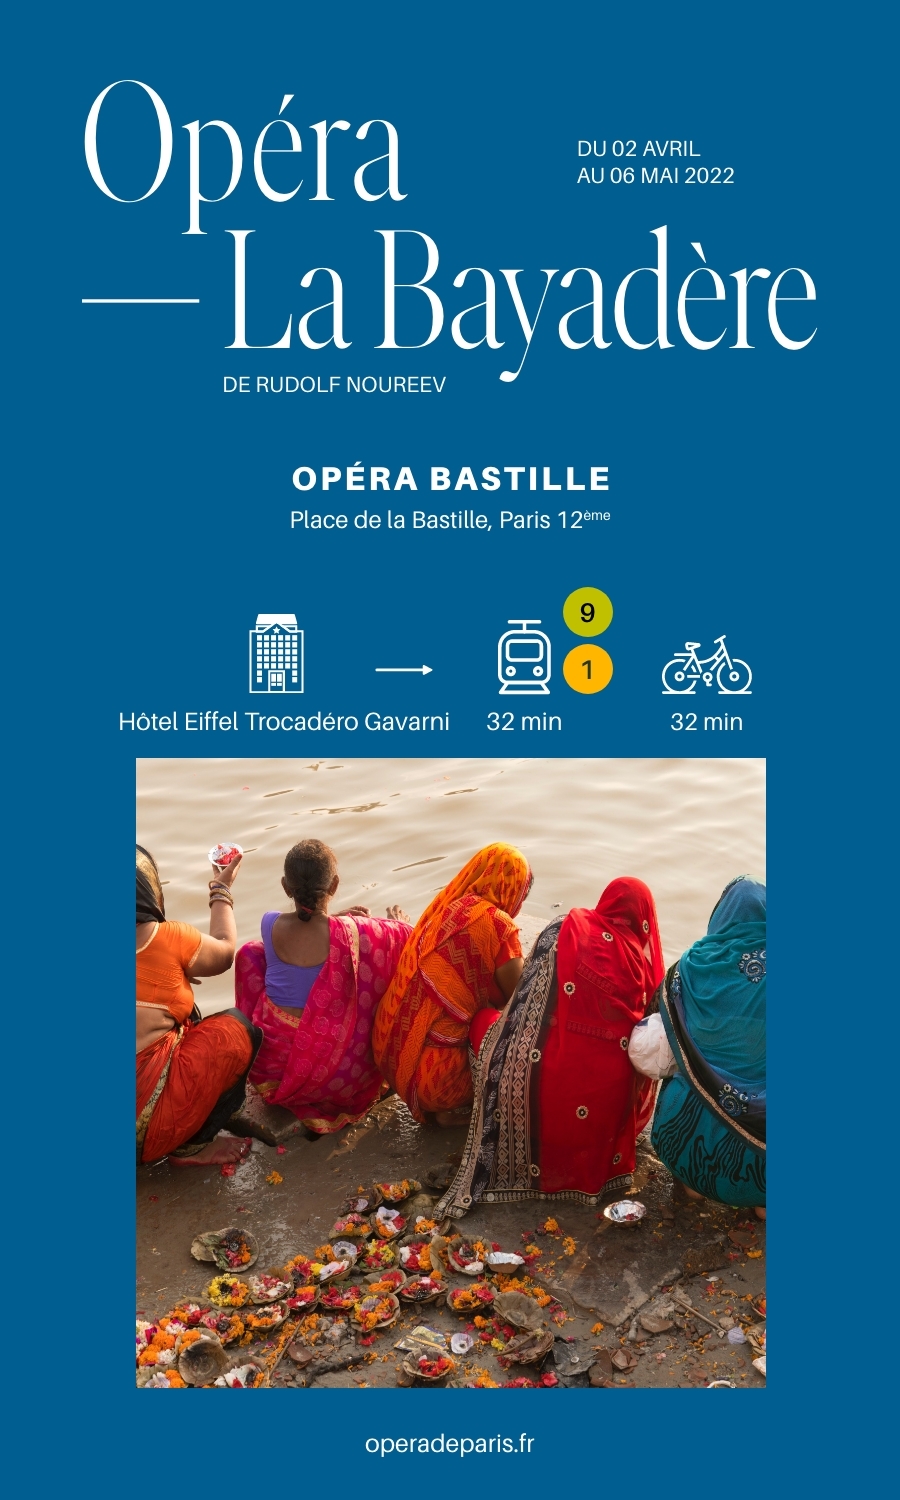 La Bayadère by Rudolf Noureev